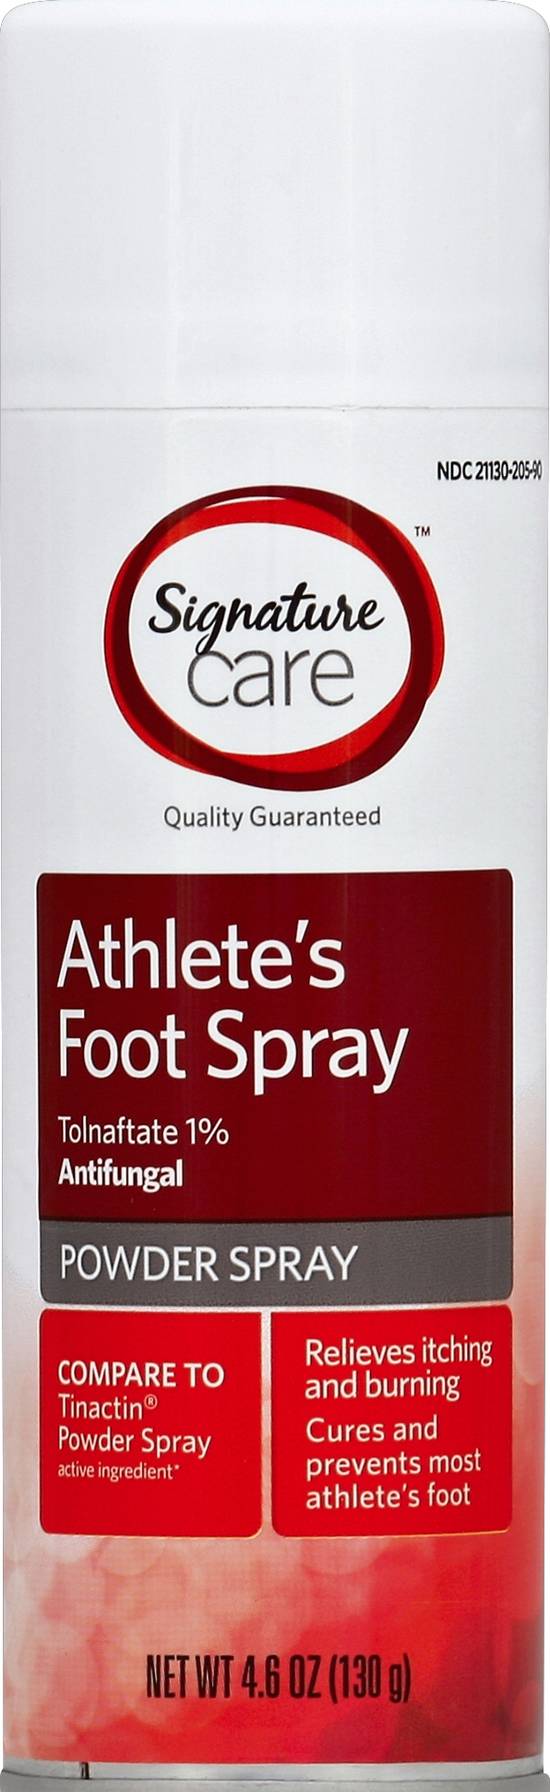 Signature Care Athlete's Foot Tolnaftate 1% Powder Spray (4.6 oz)